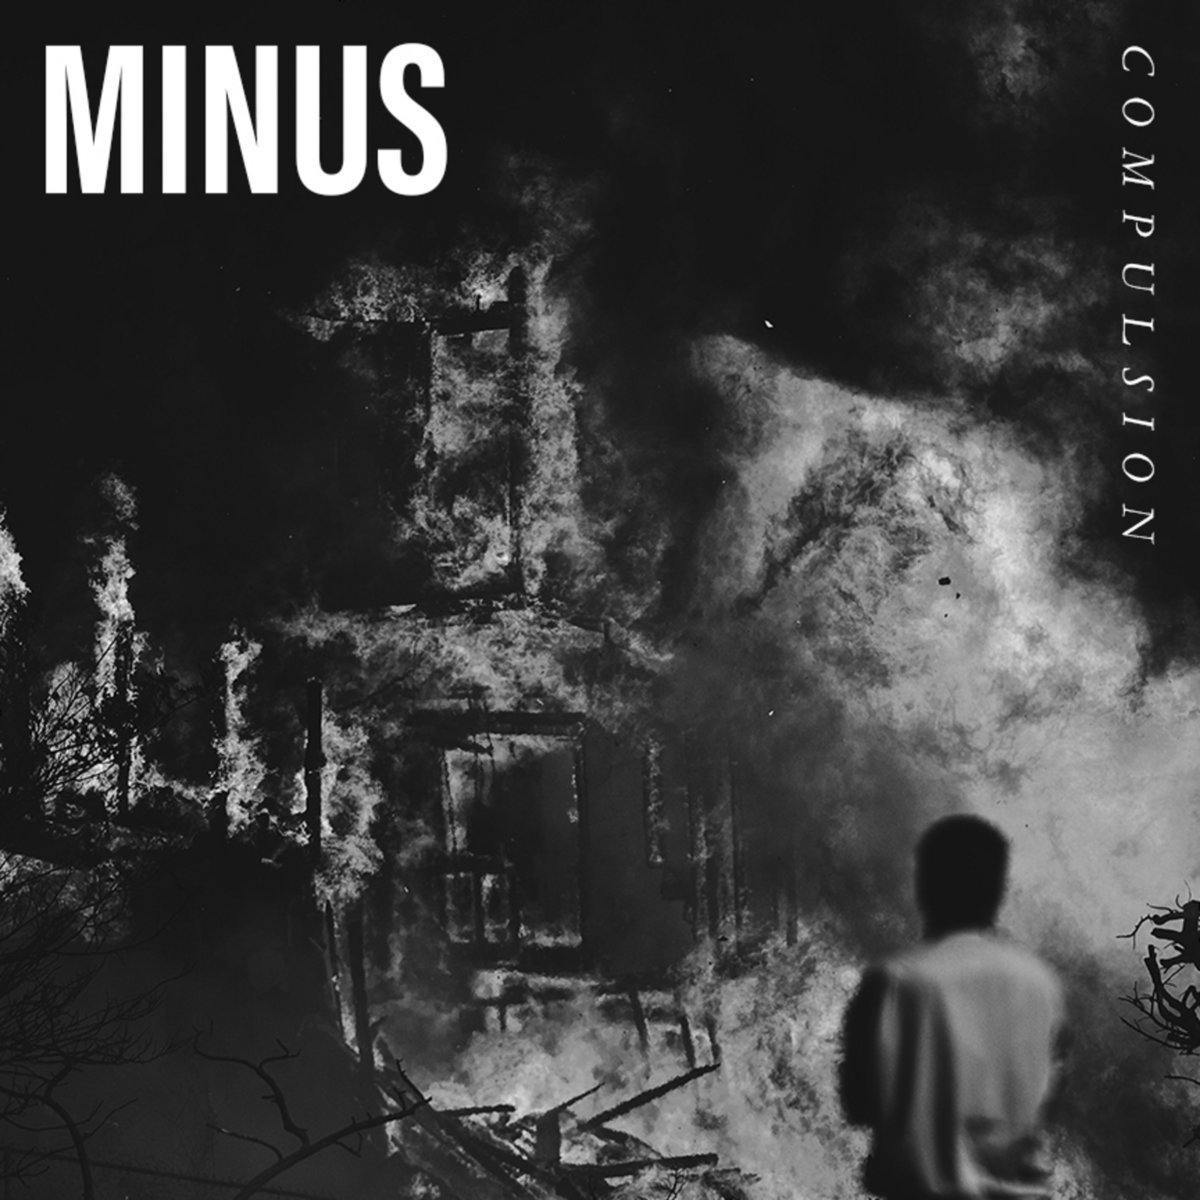 Buy – Minus "Compulsion" 12" – Band & Music Merch – Cold Cuts Merch